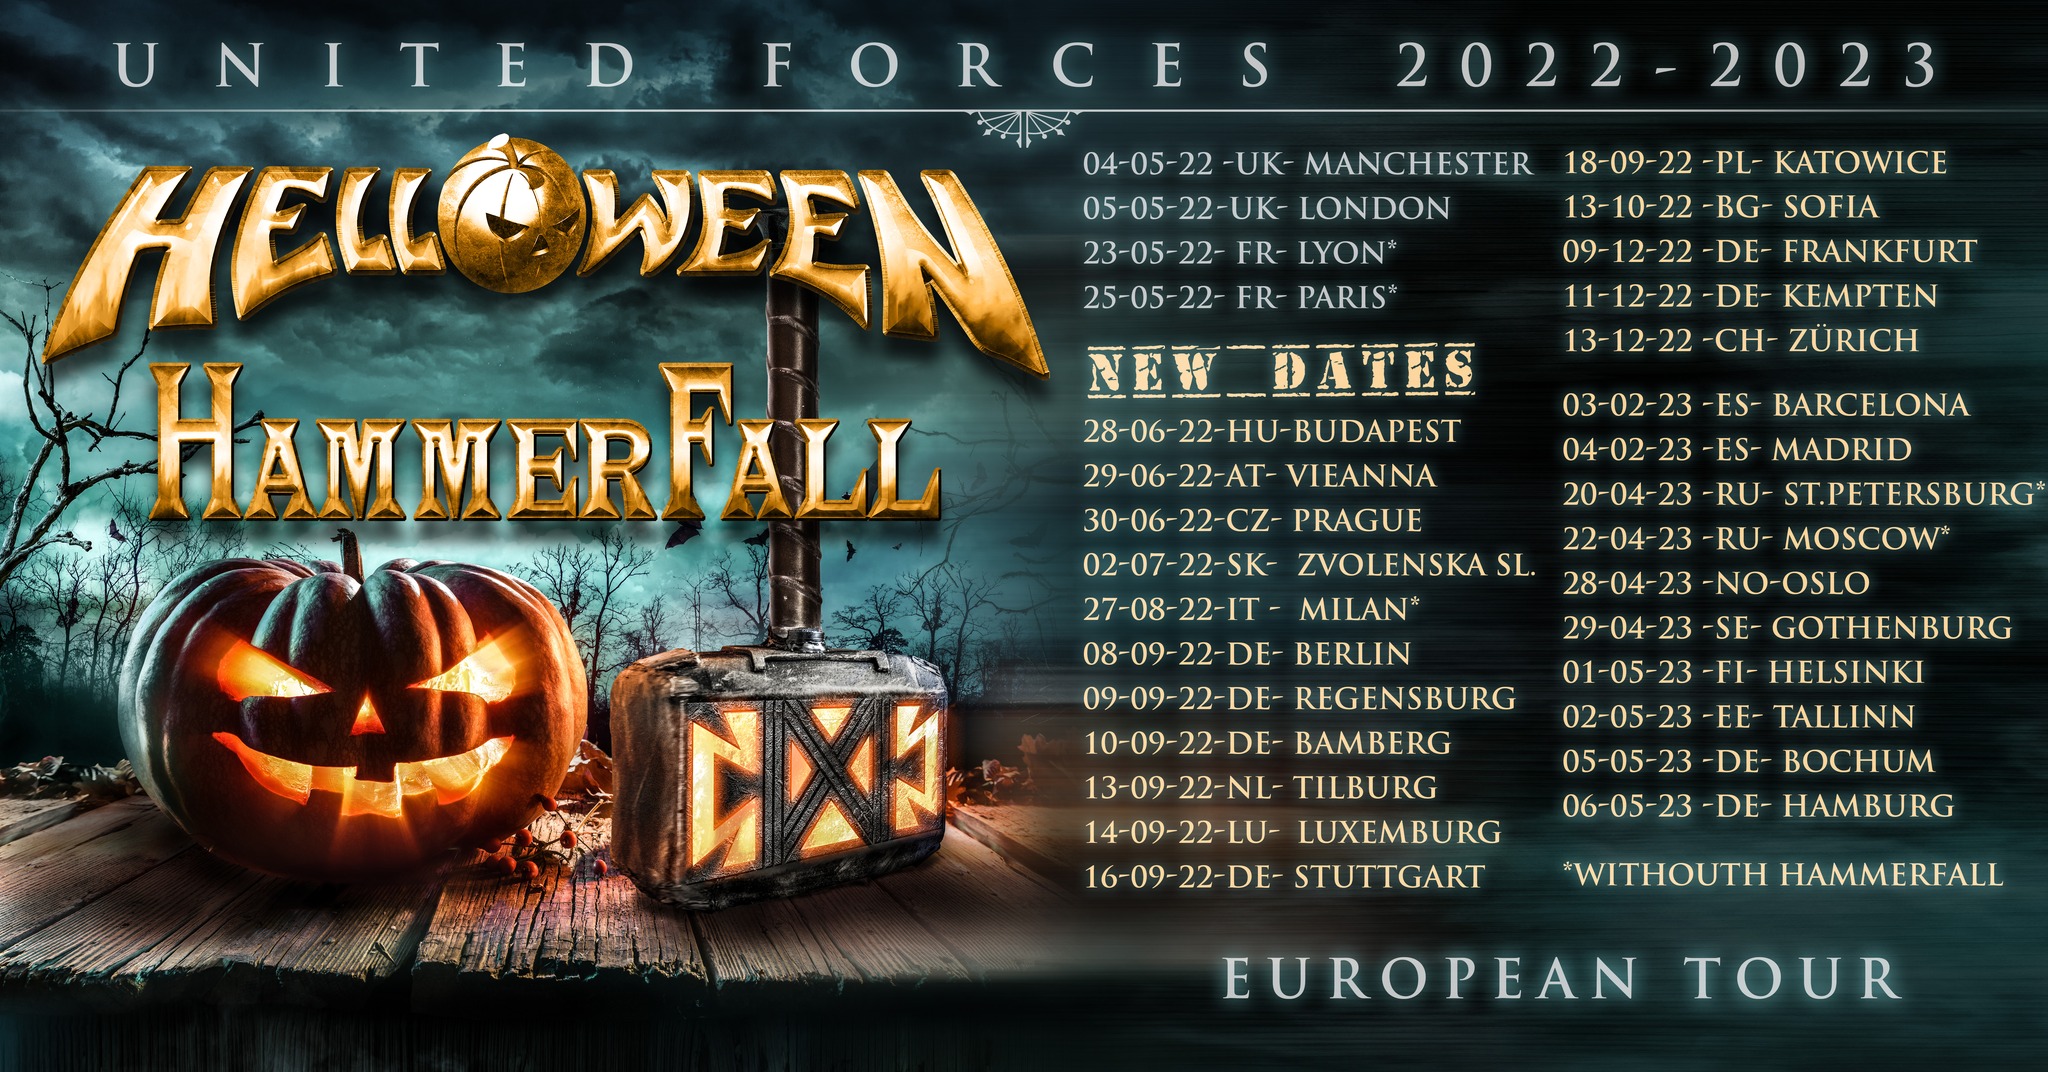 Helloween a HammerFall zahrají v Praze 30. června 2022